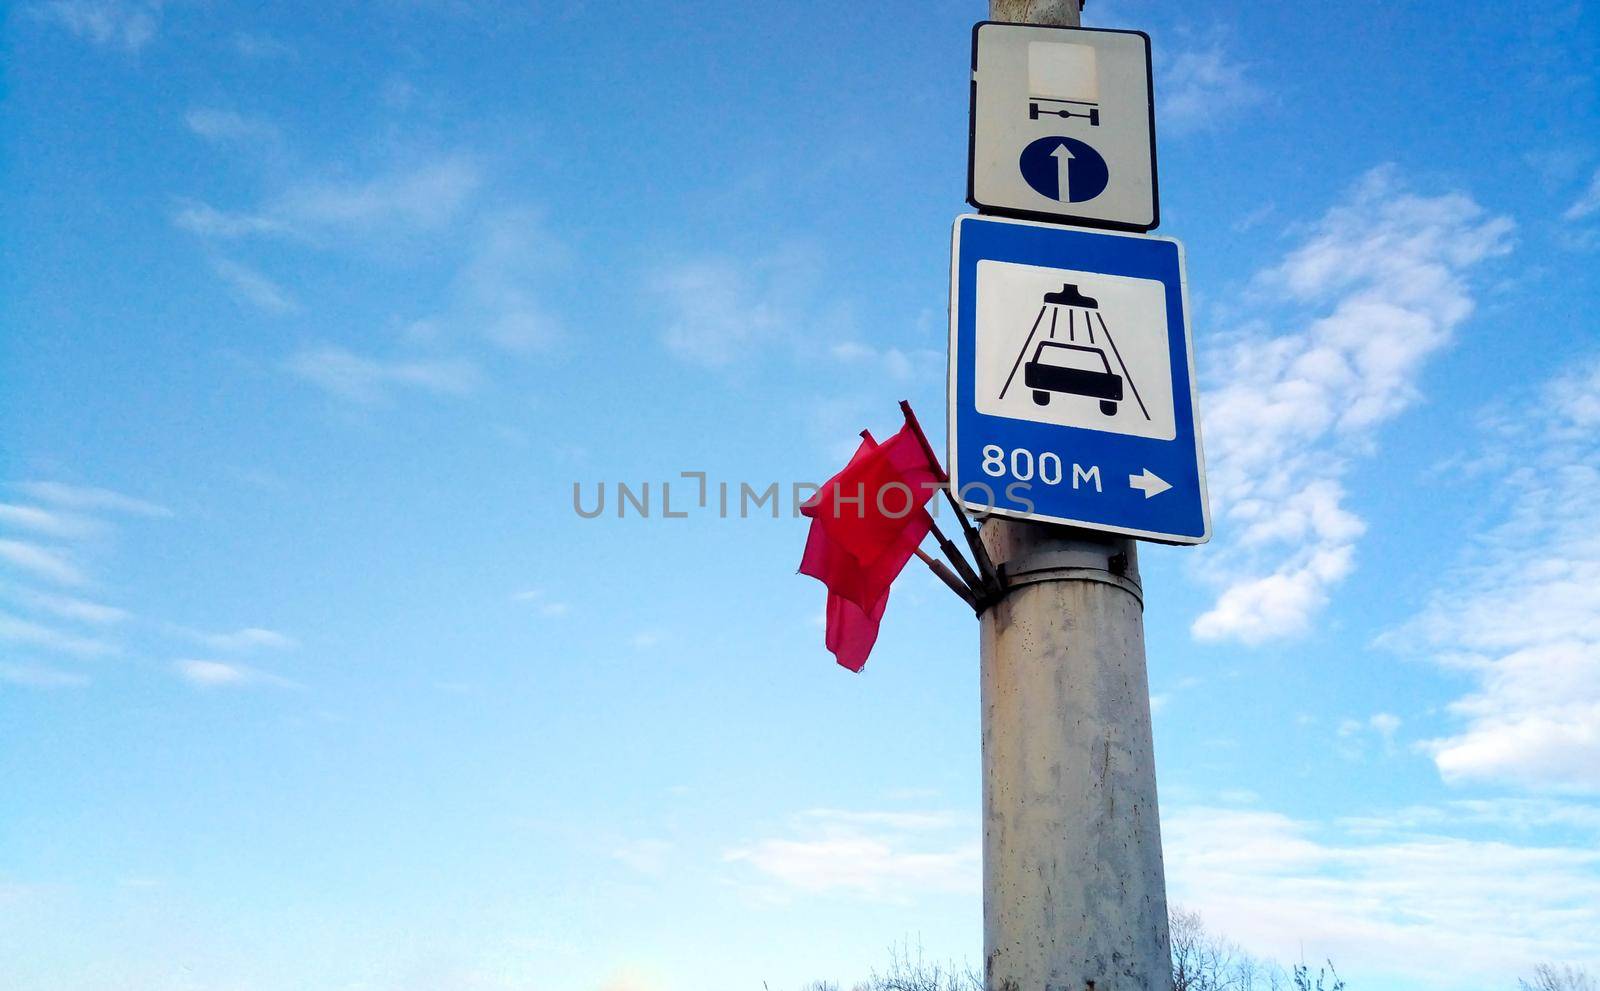 Car wash sign on the street on a pole. by lapushka62